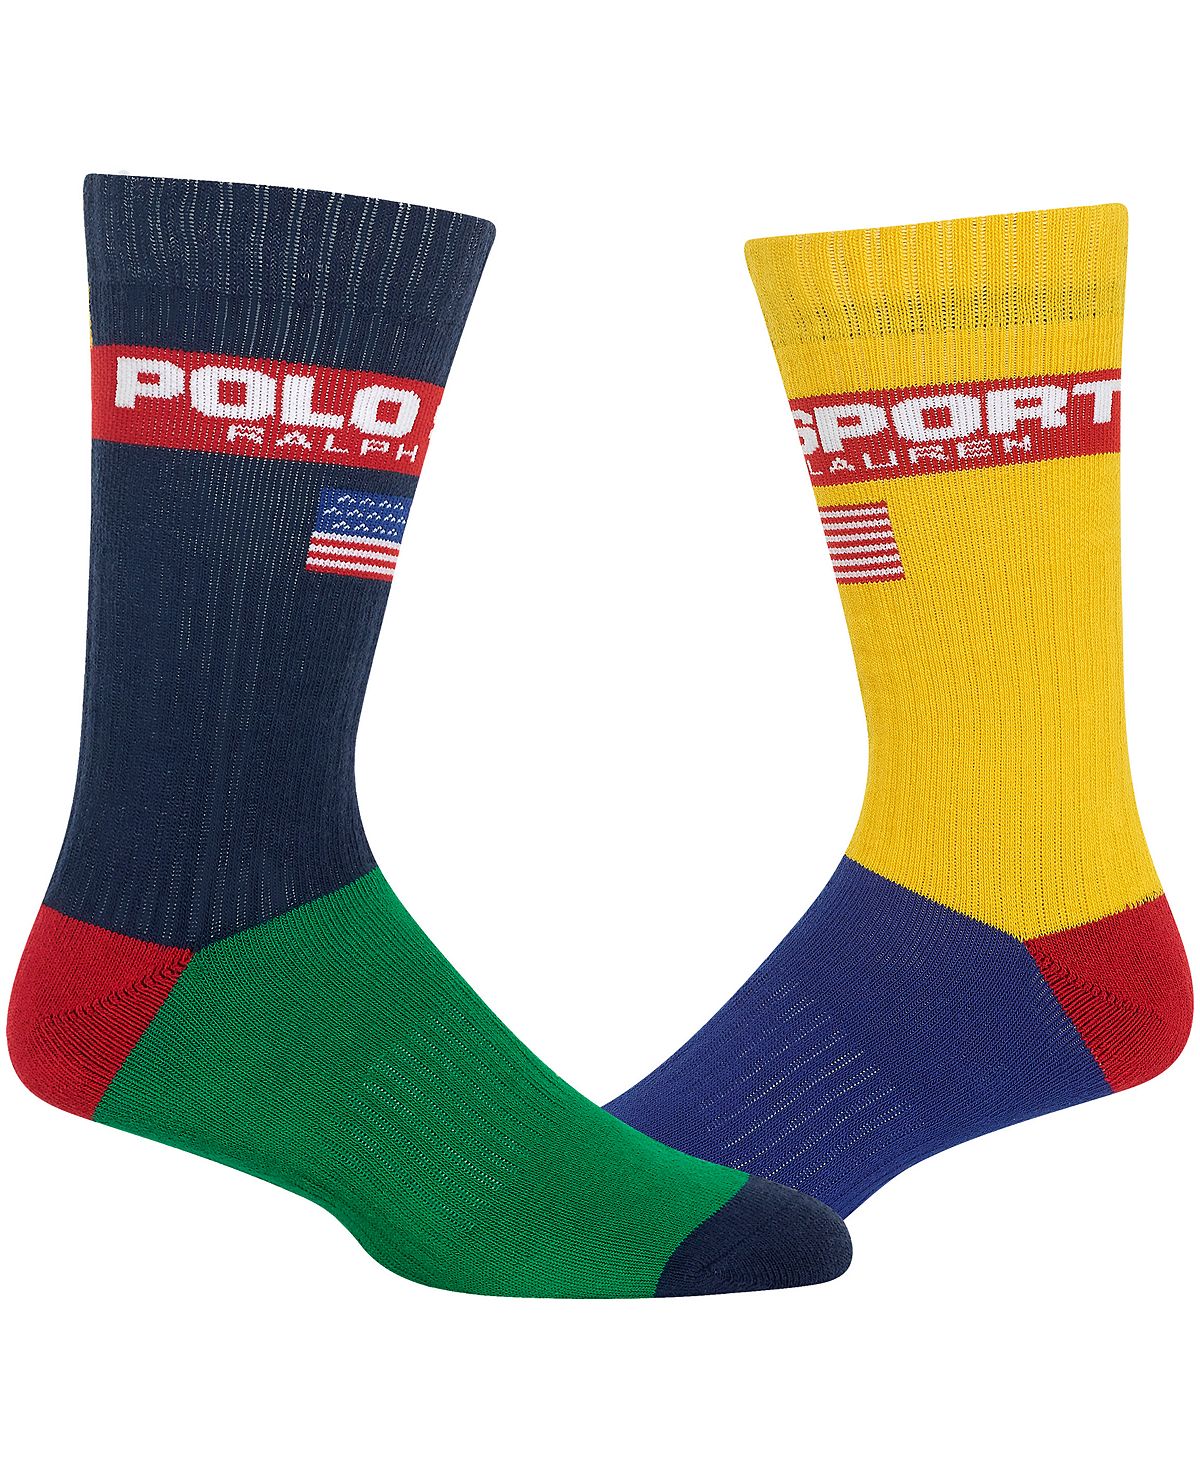 Polo Ralph Lauren Colorblocked Crew Socks Multi